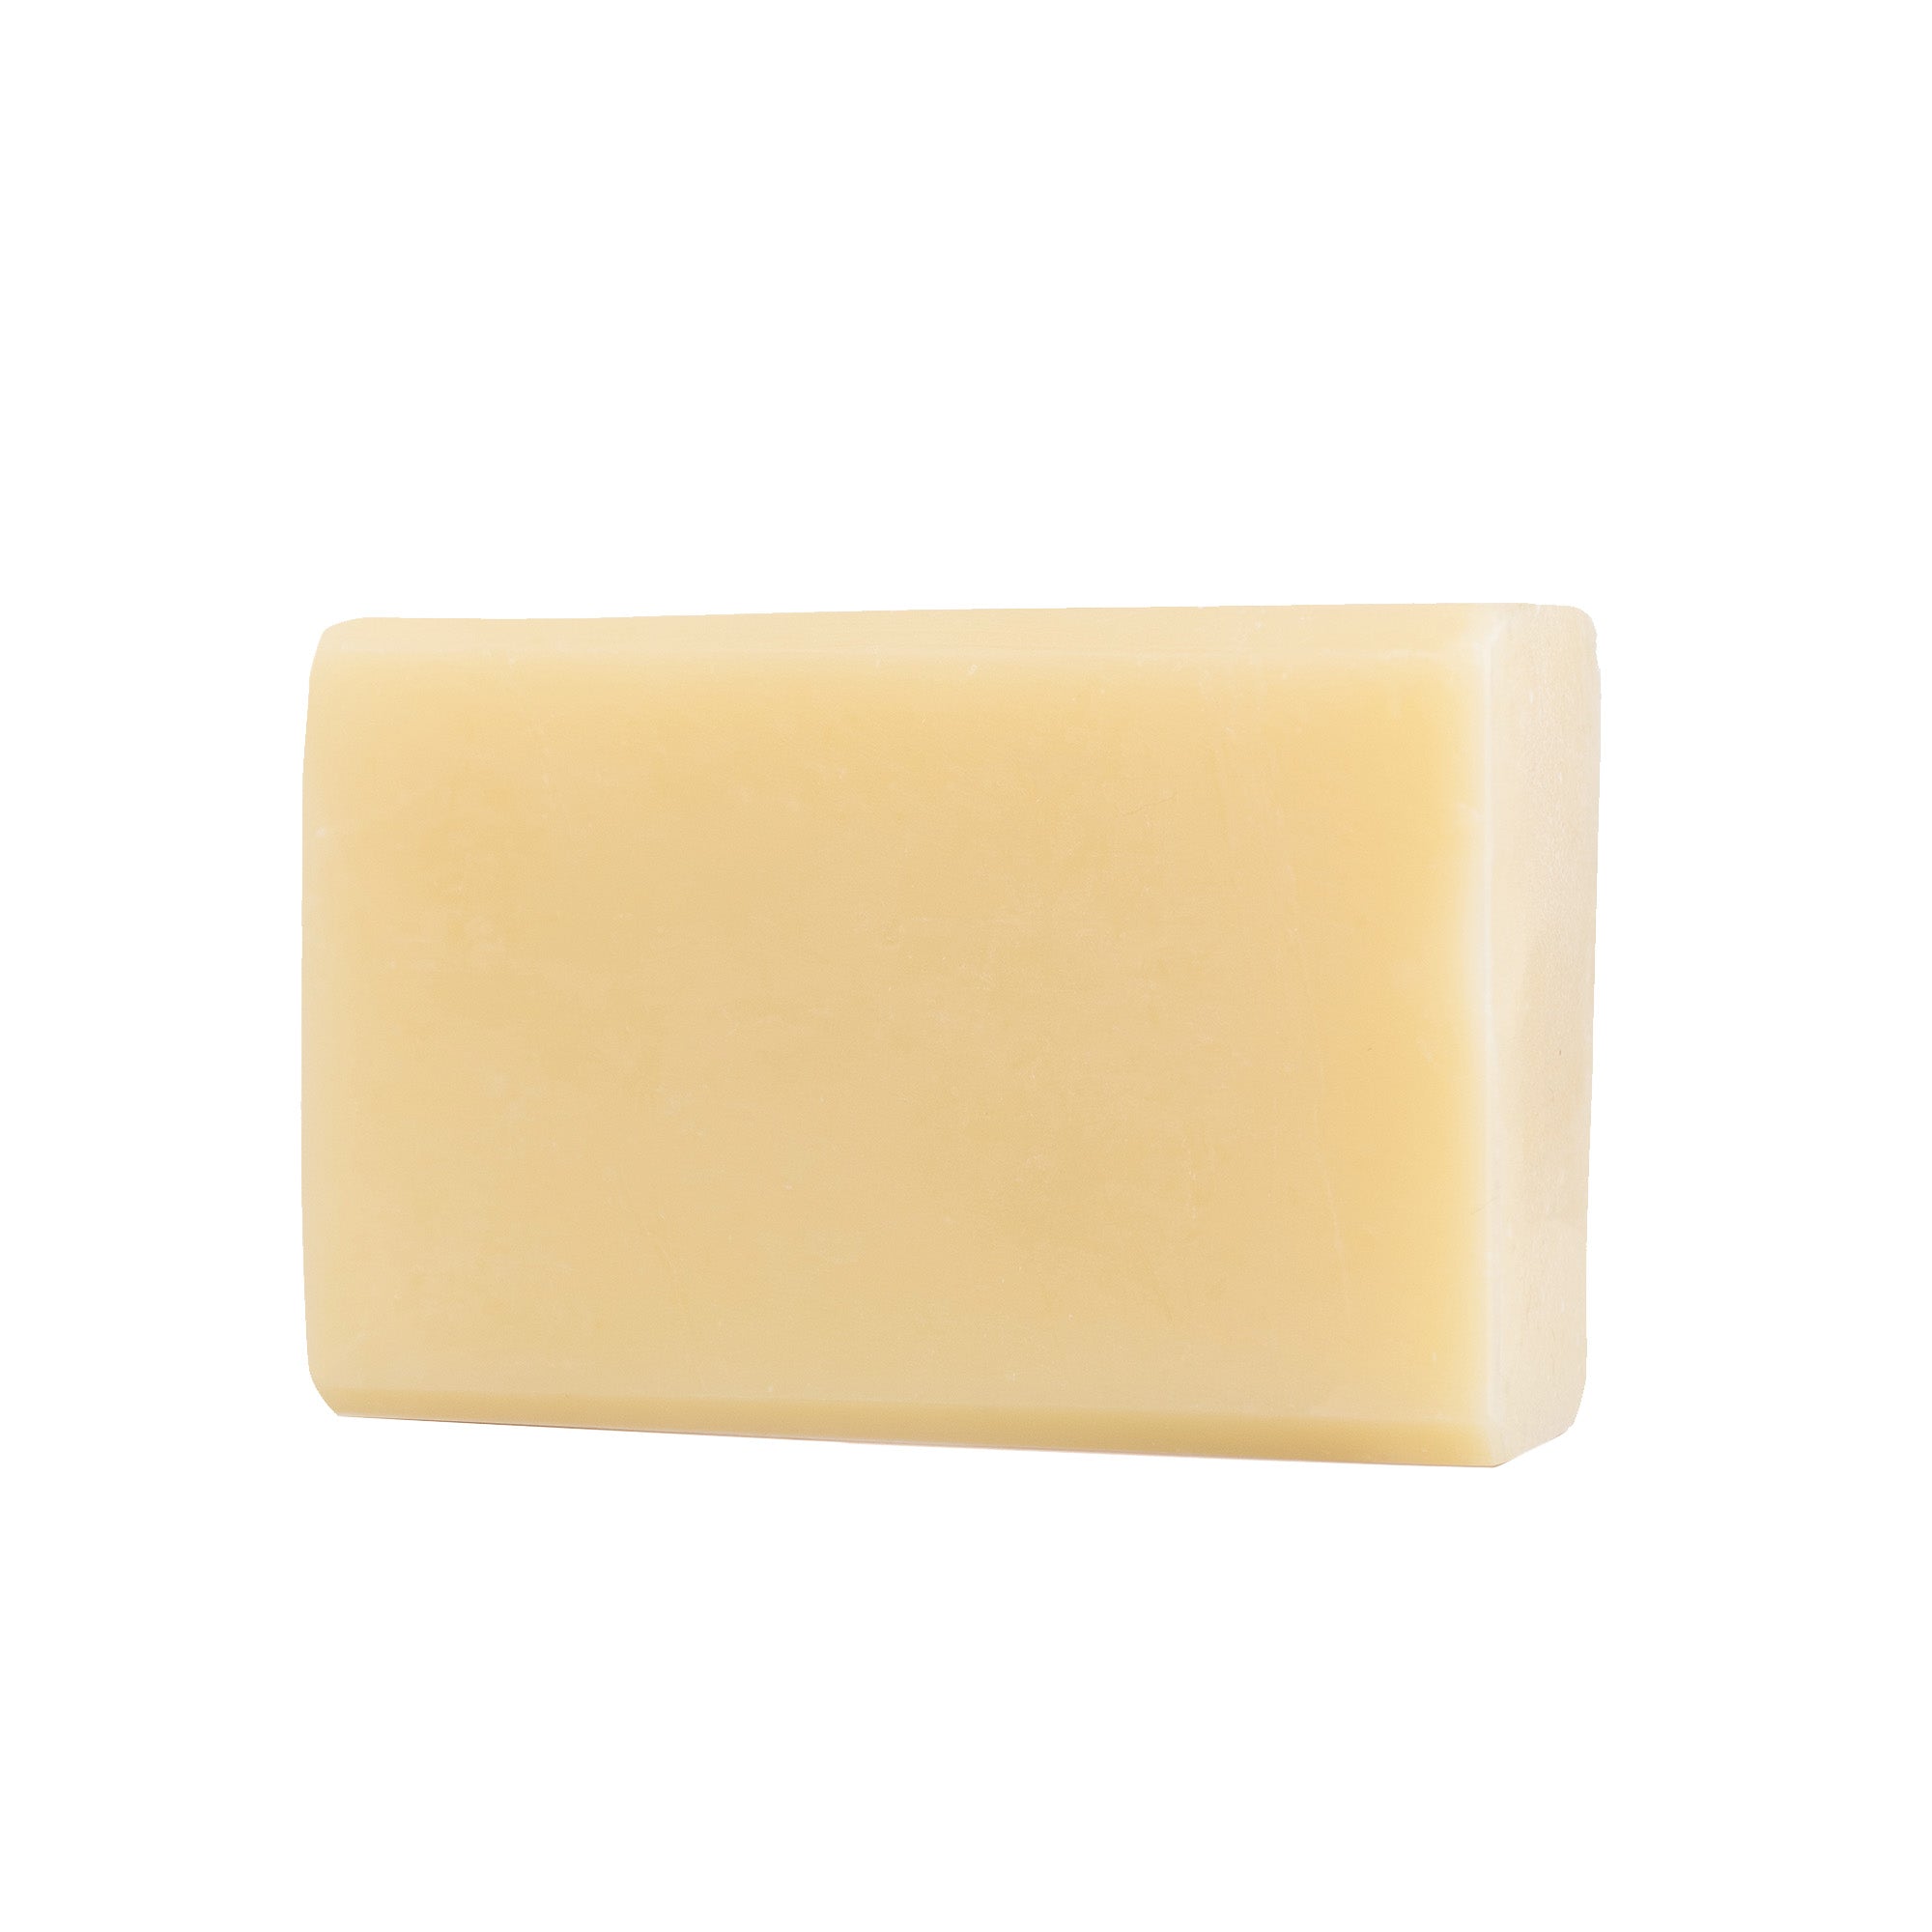 Close-up image of Antü Refreshing Soap bar.